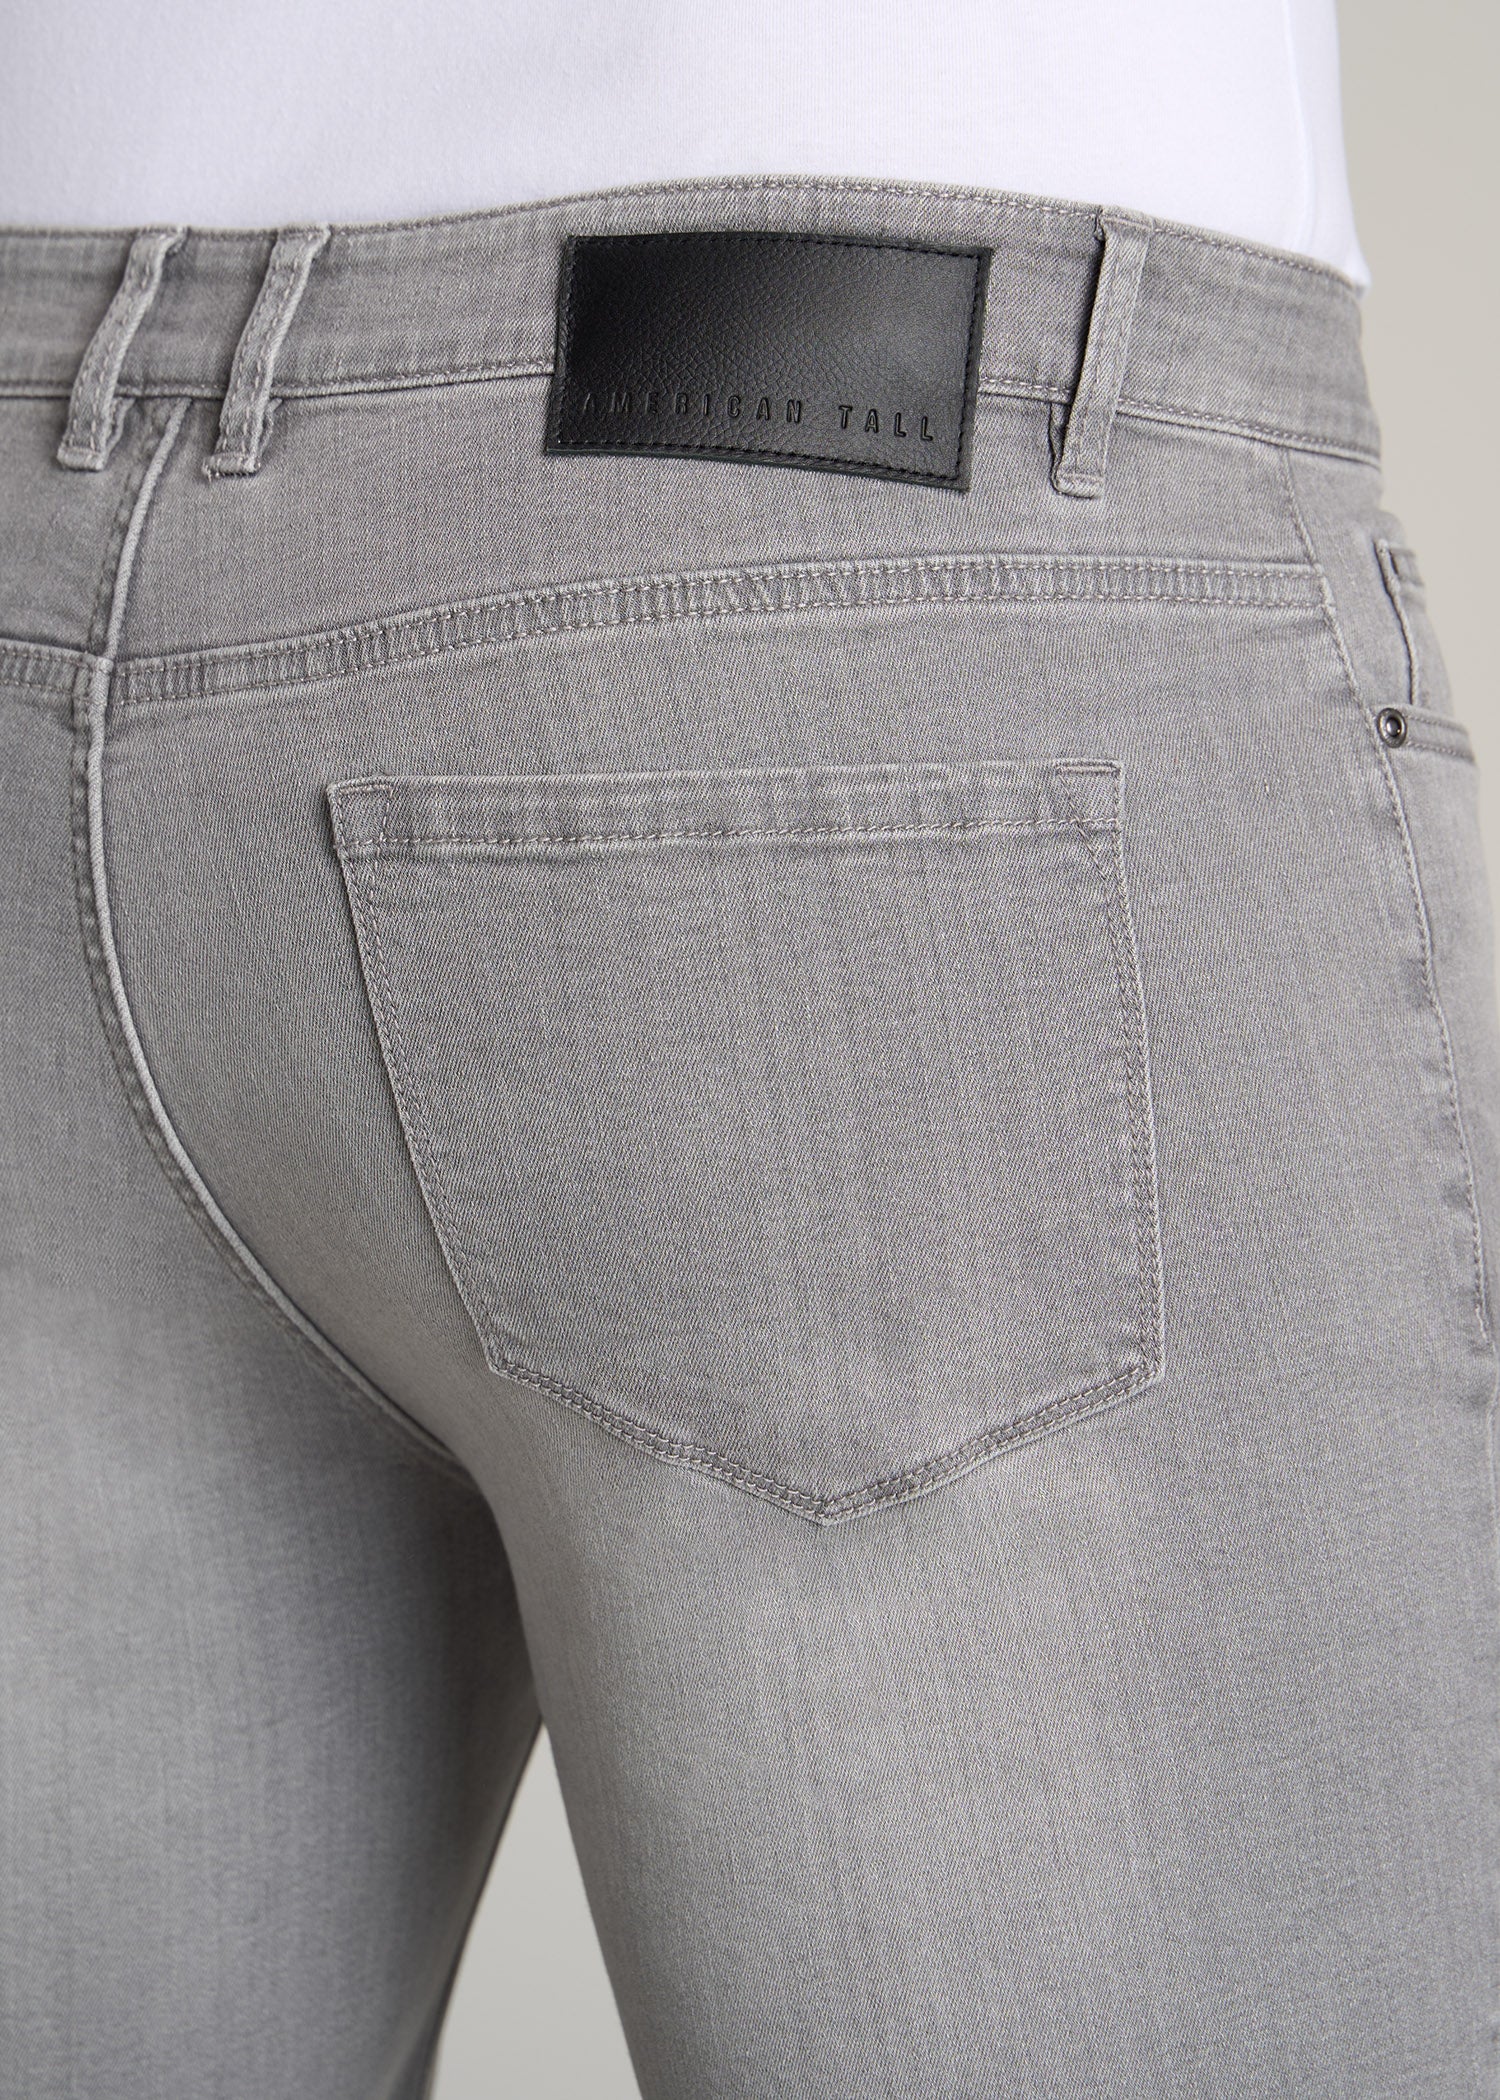 American Tall Men Dylan Slim Fit Jeans Concrete Grey Detail 1946x ?v=1666015171